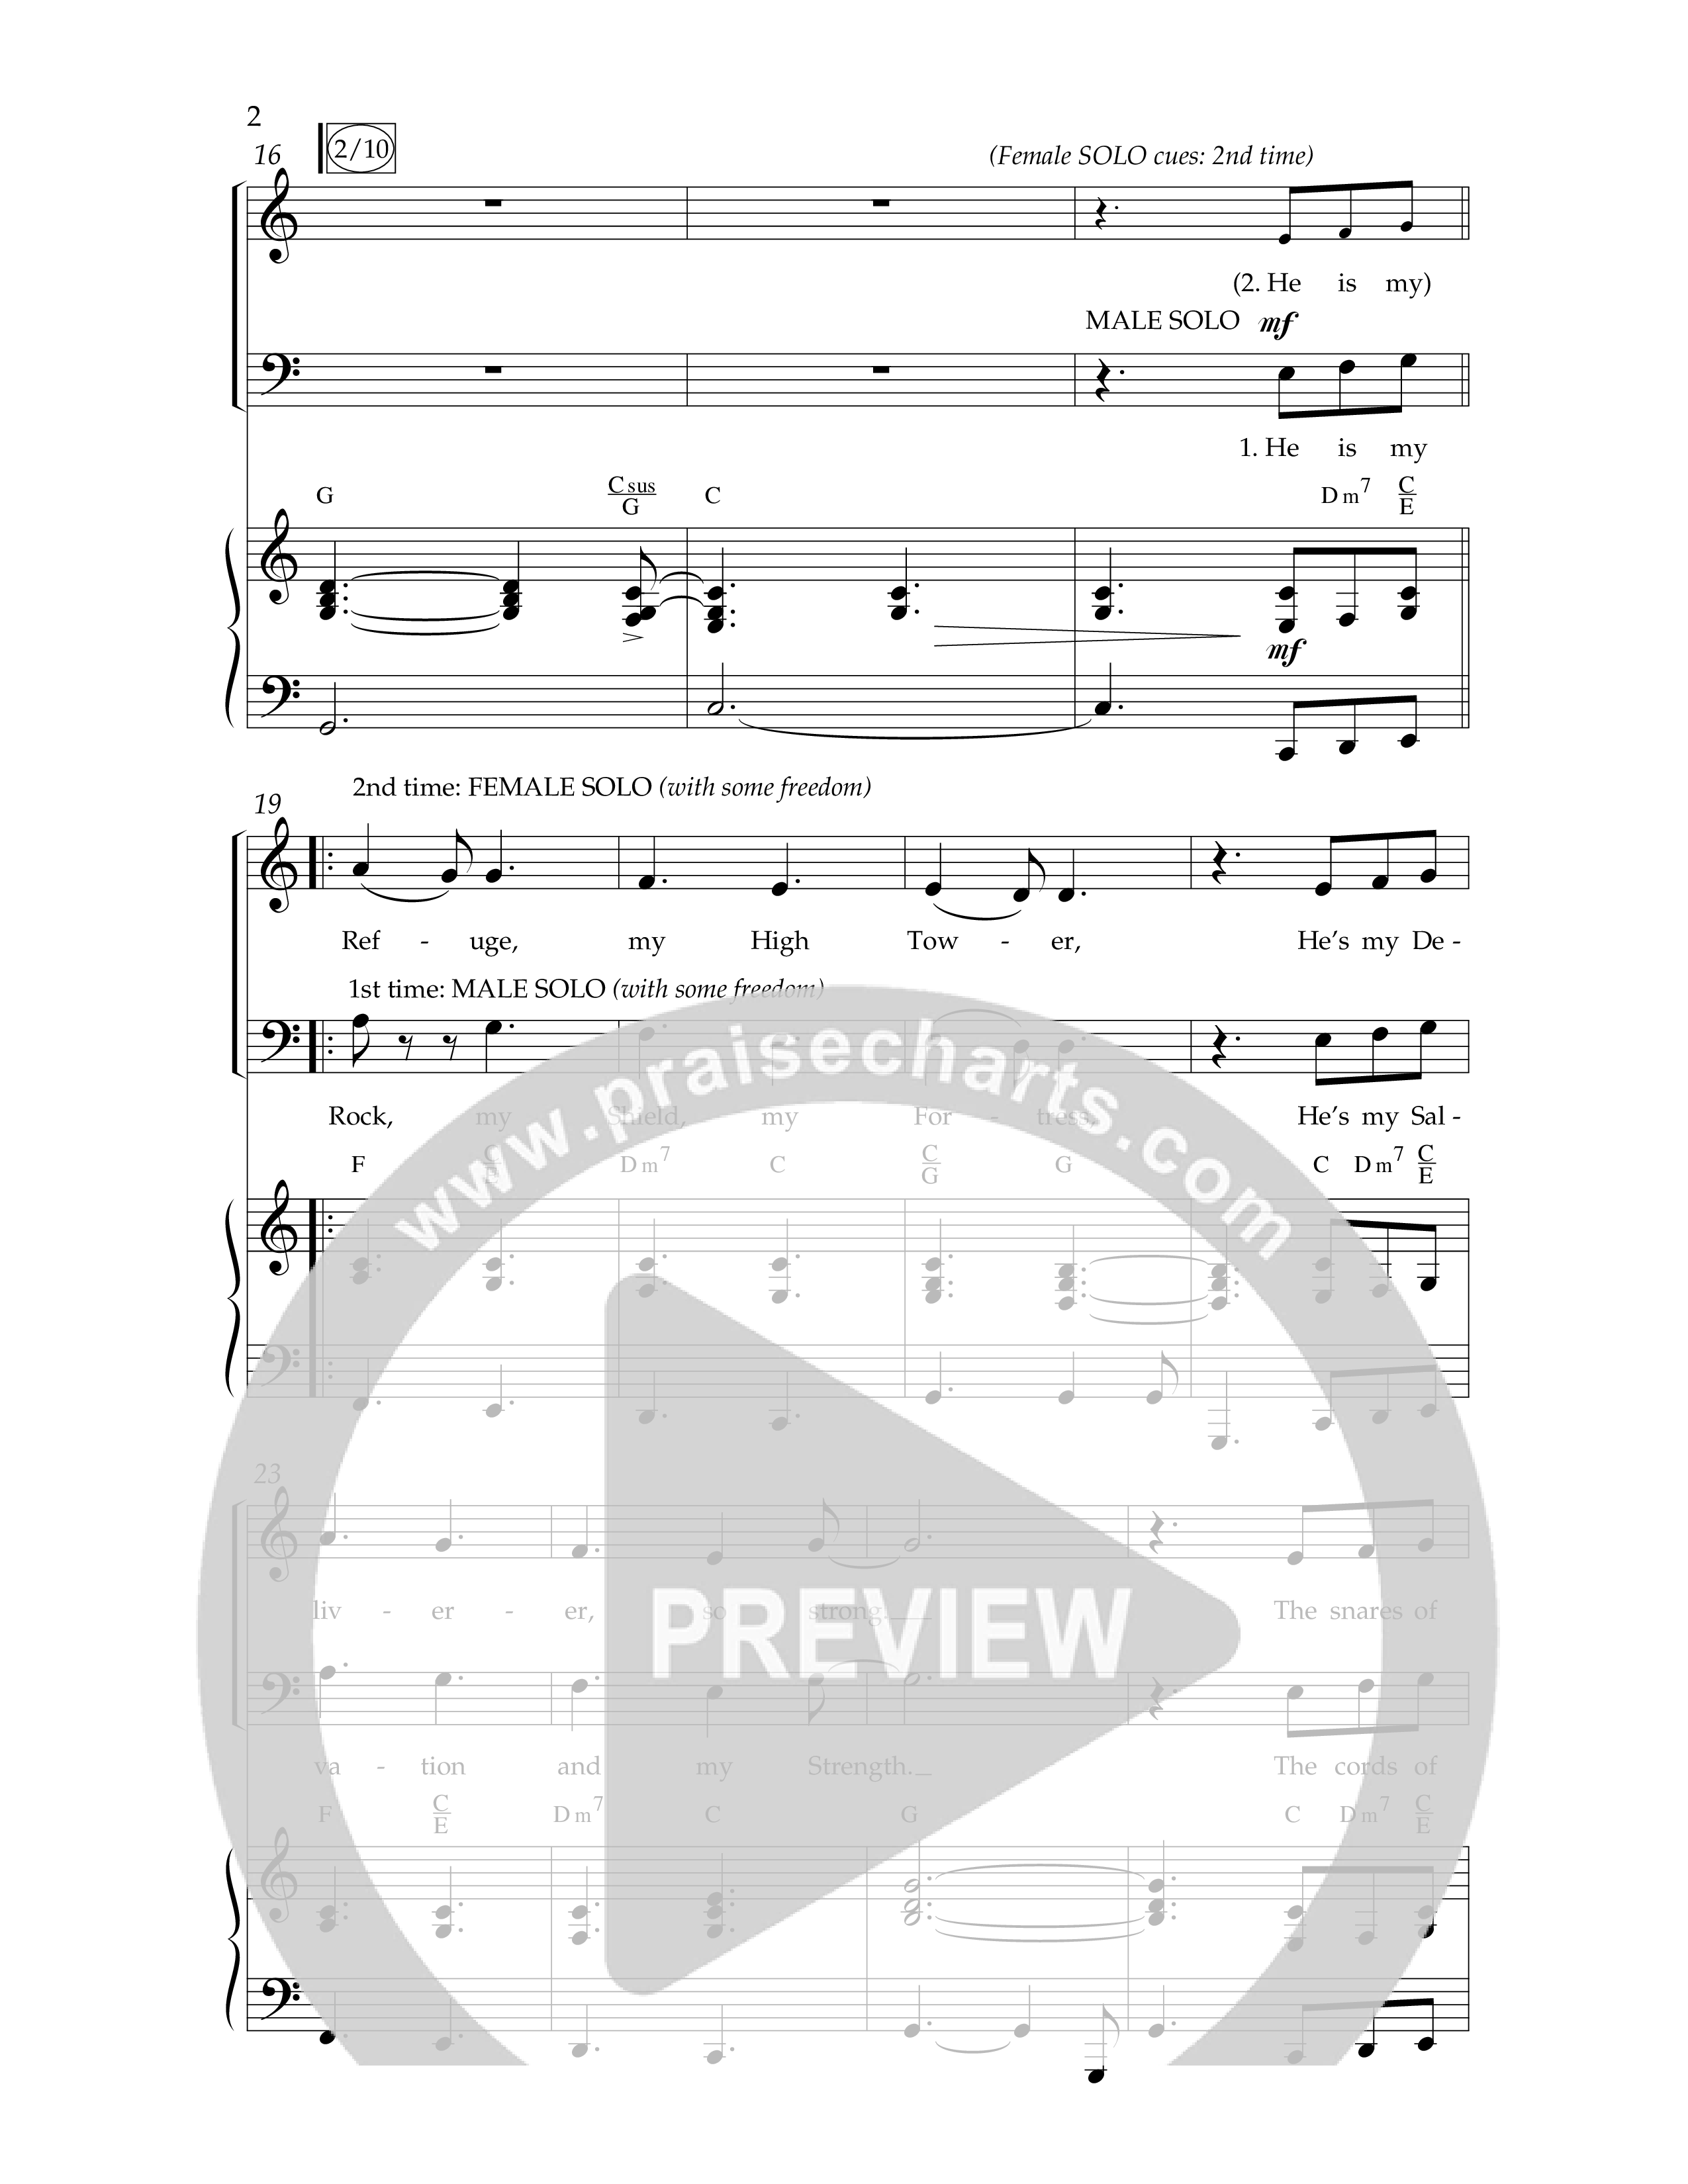 I Will Not Be Shaken (Choral Anthem SATB) Anthem (SATB/Piano) (Lifeway Choral / Arr. Cliff Duren)